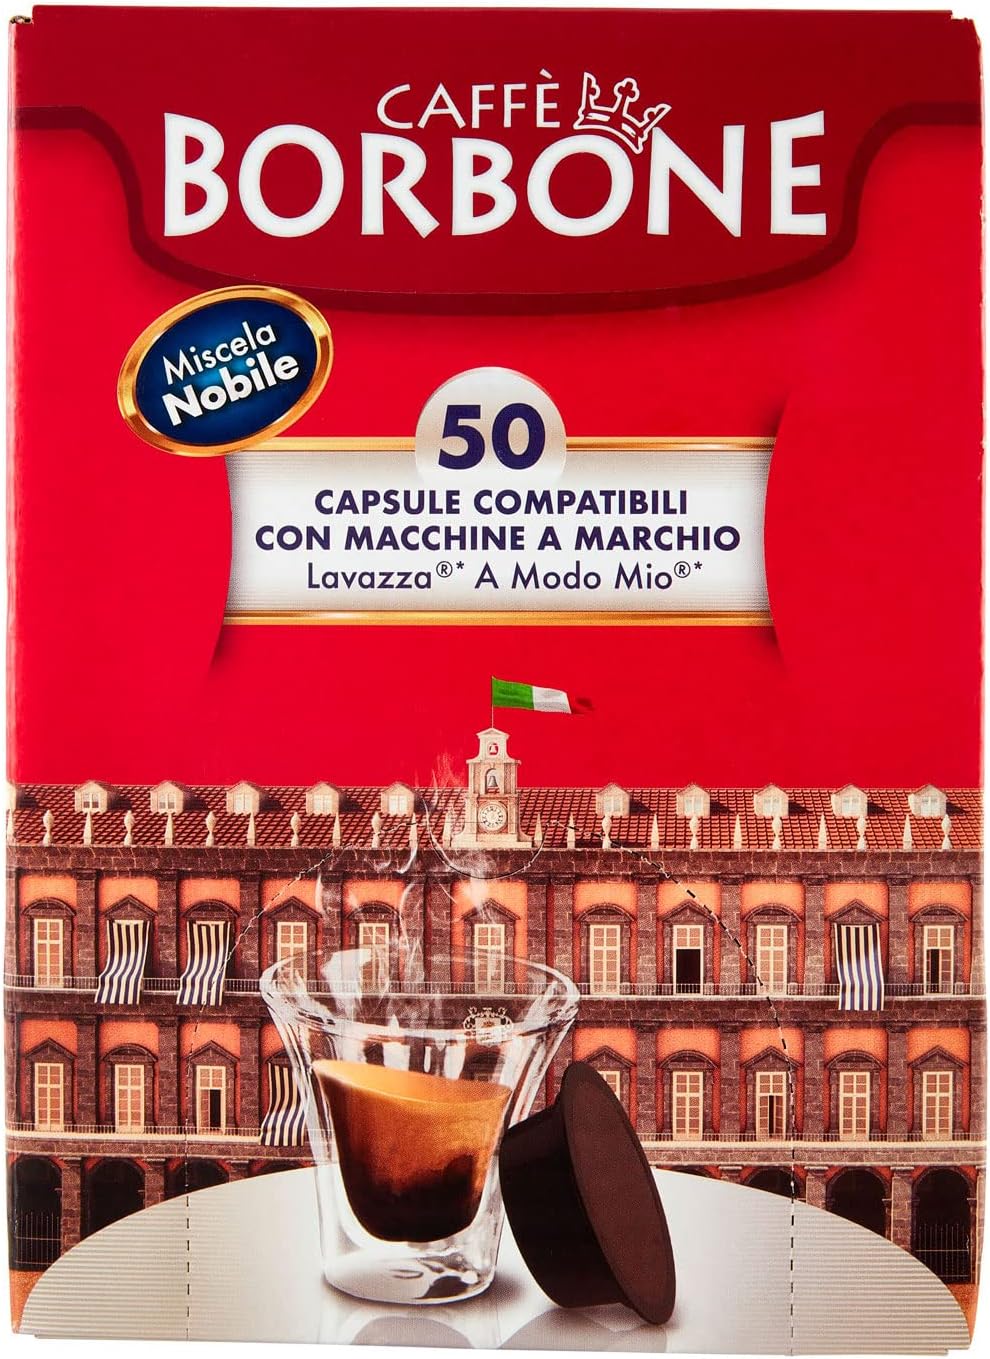 Caffe Borbone AMSBLUPALAZNOBIL050N Capsule Caffe Comp.a Modo Mio Miscela Nobile 50pz